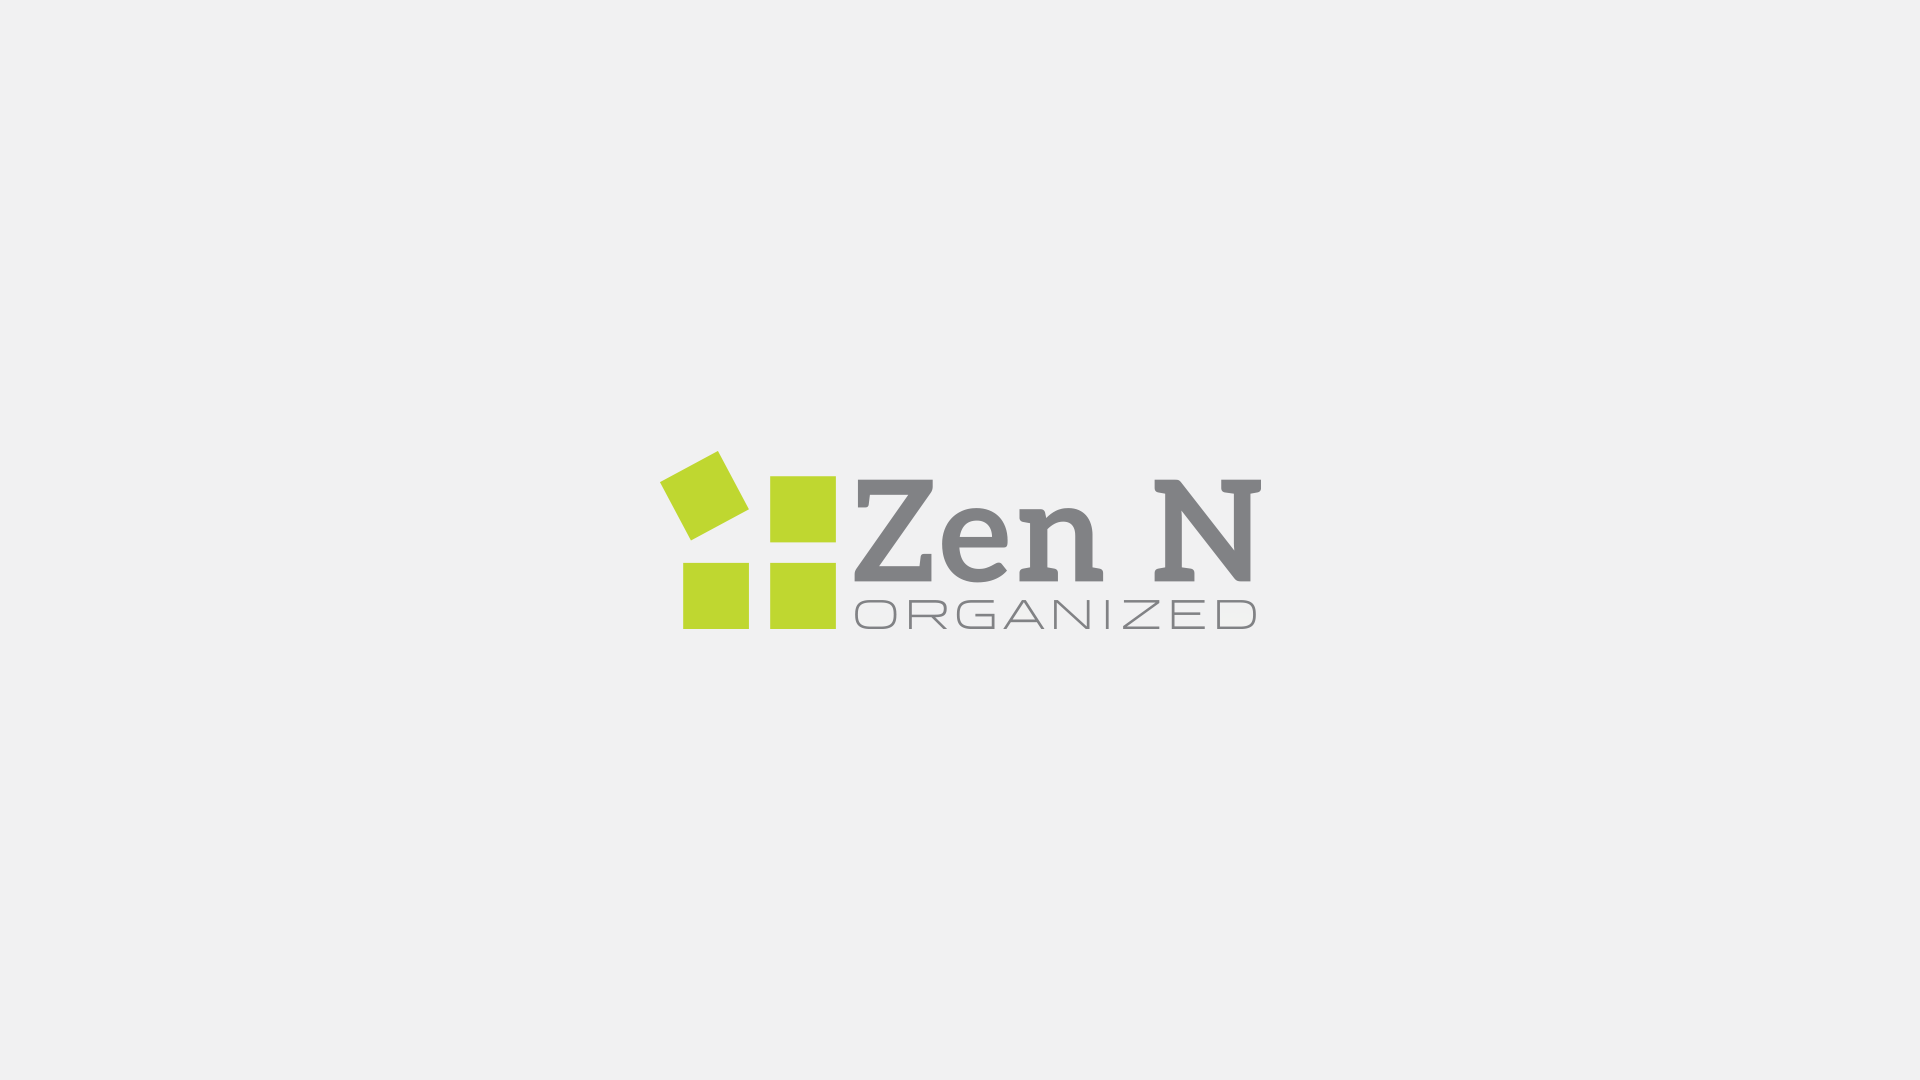 Zen N Organized